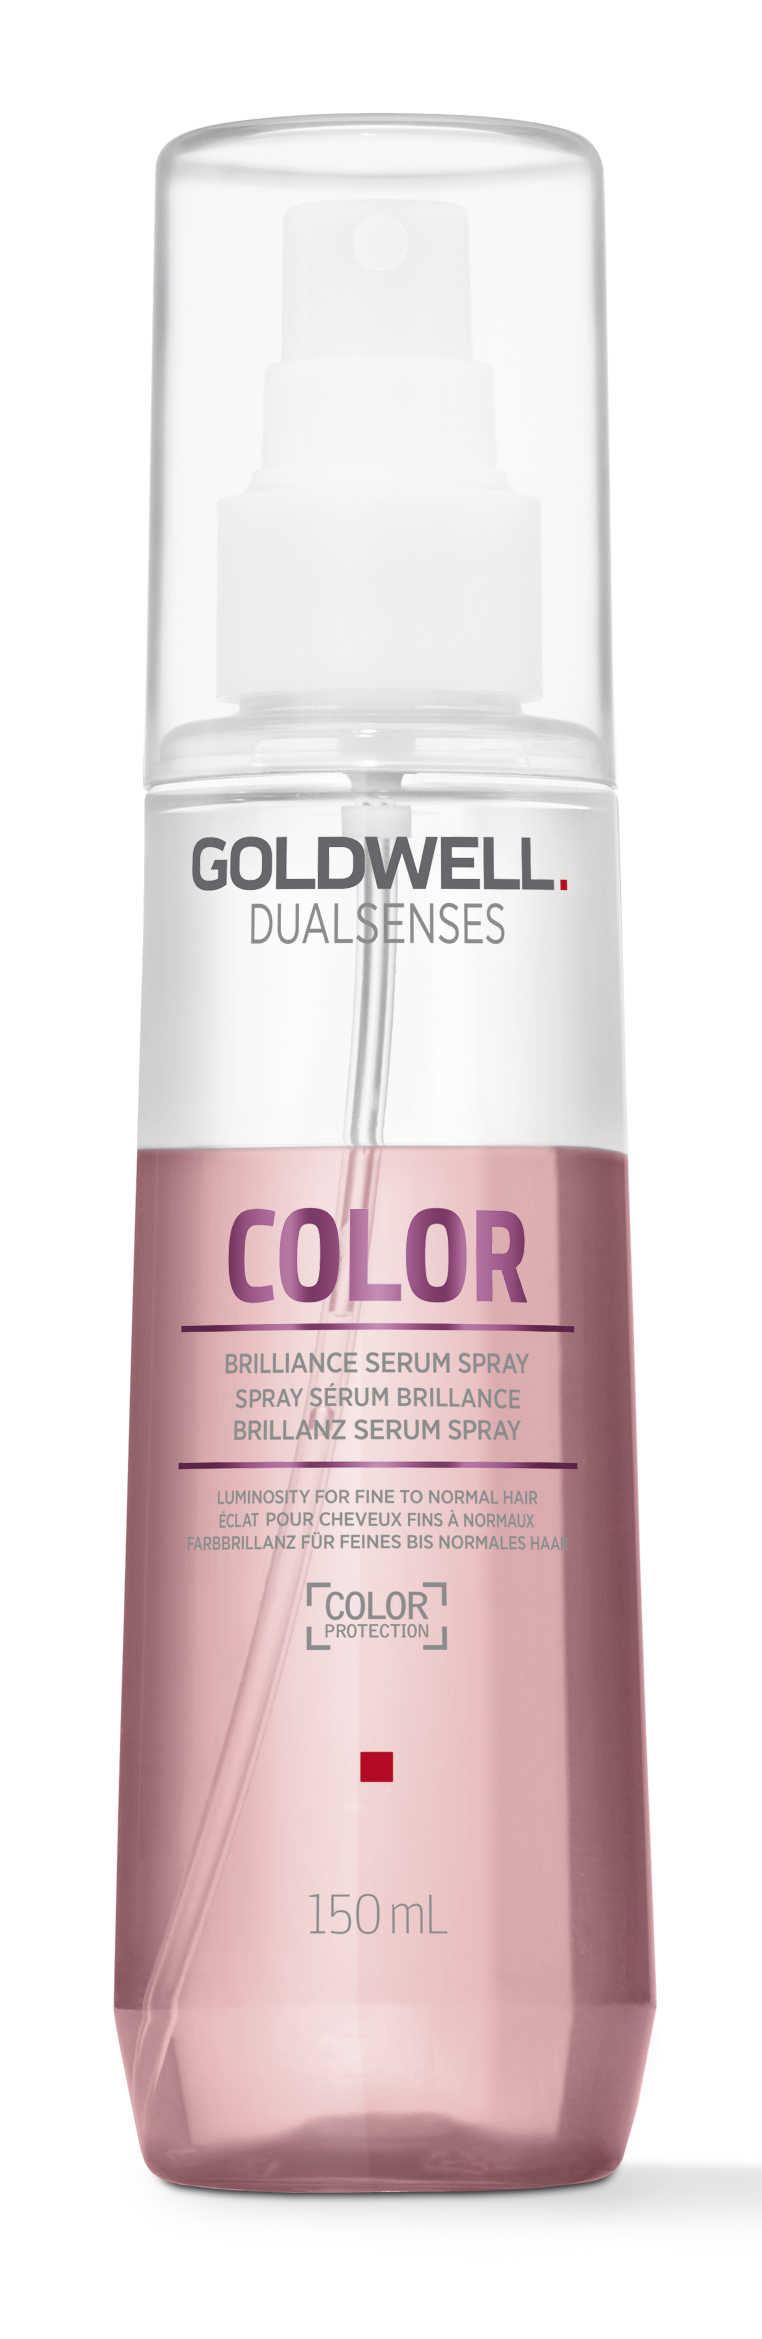 Dual Senses Color Serum Spray    150ml